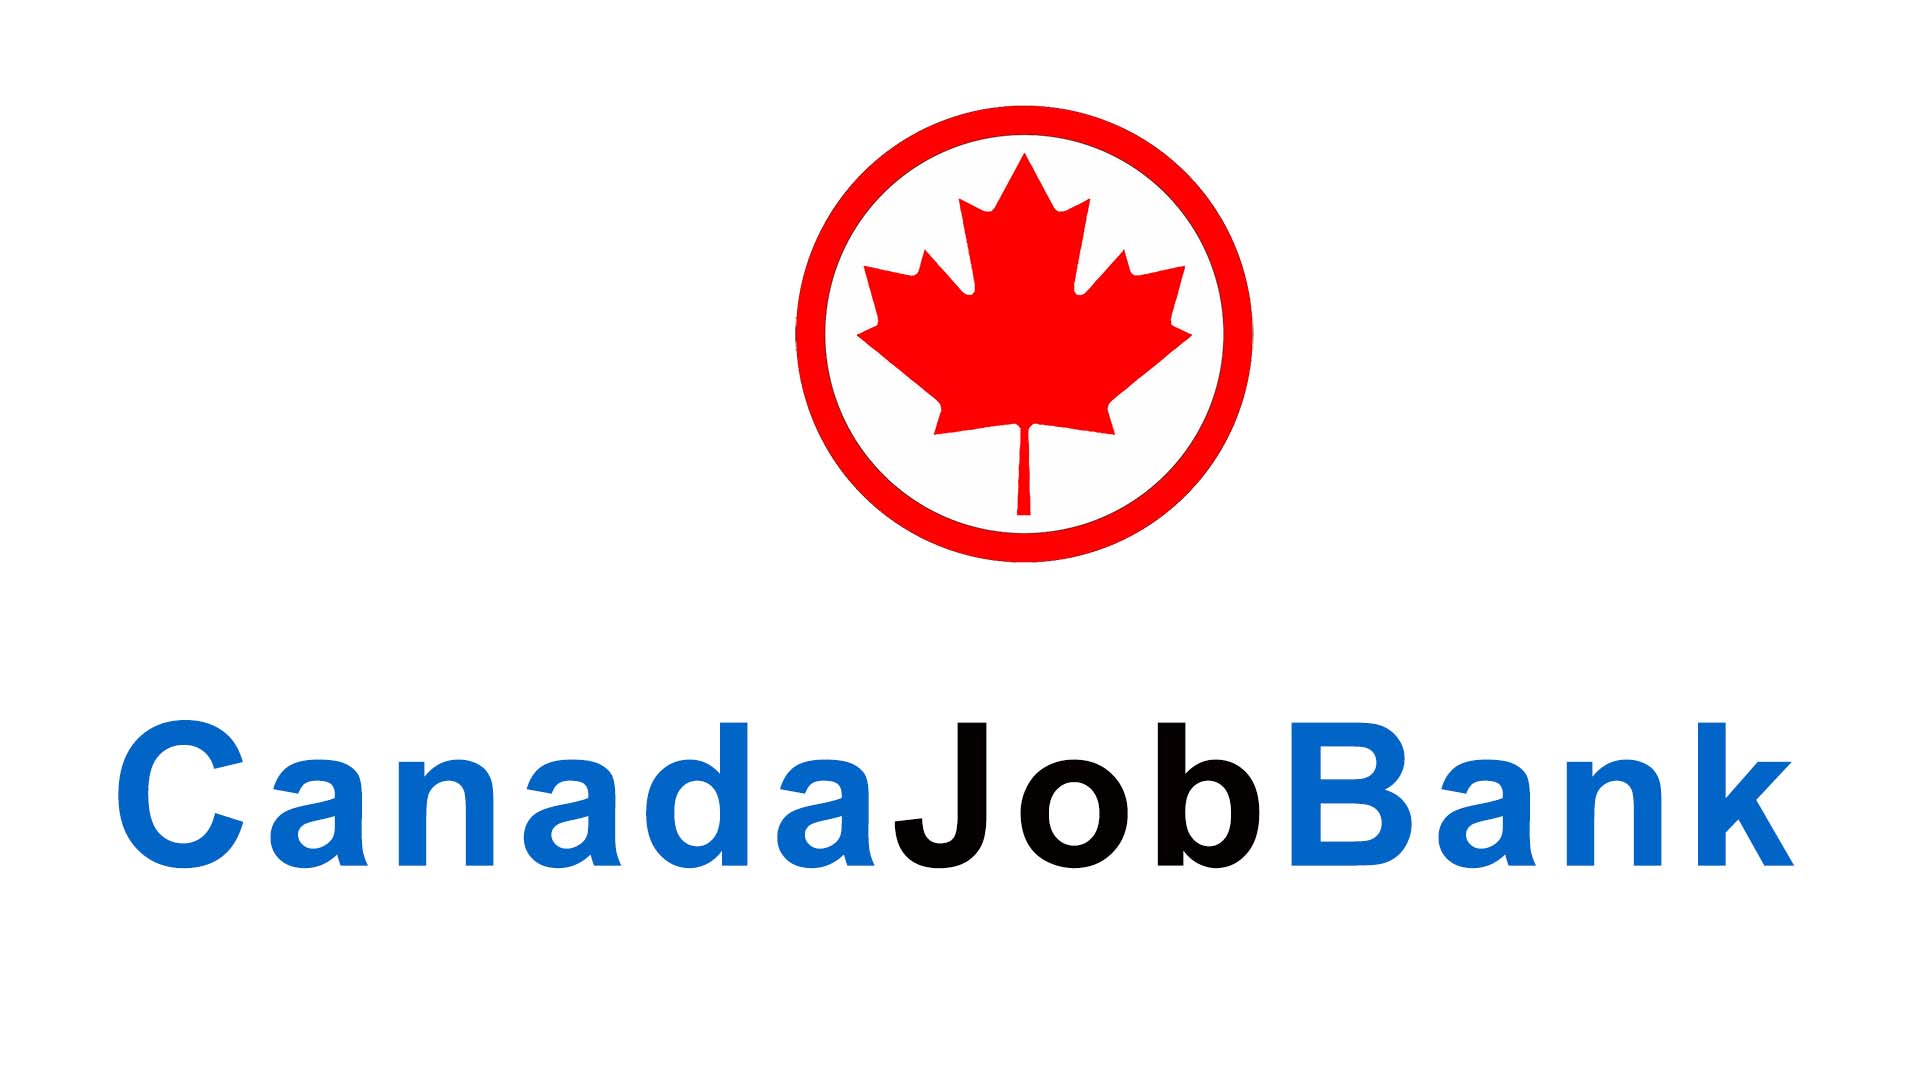 Canada Job Bank - Start Your Career Here